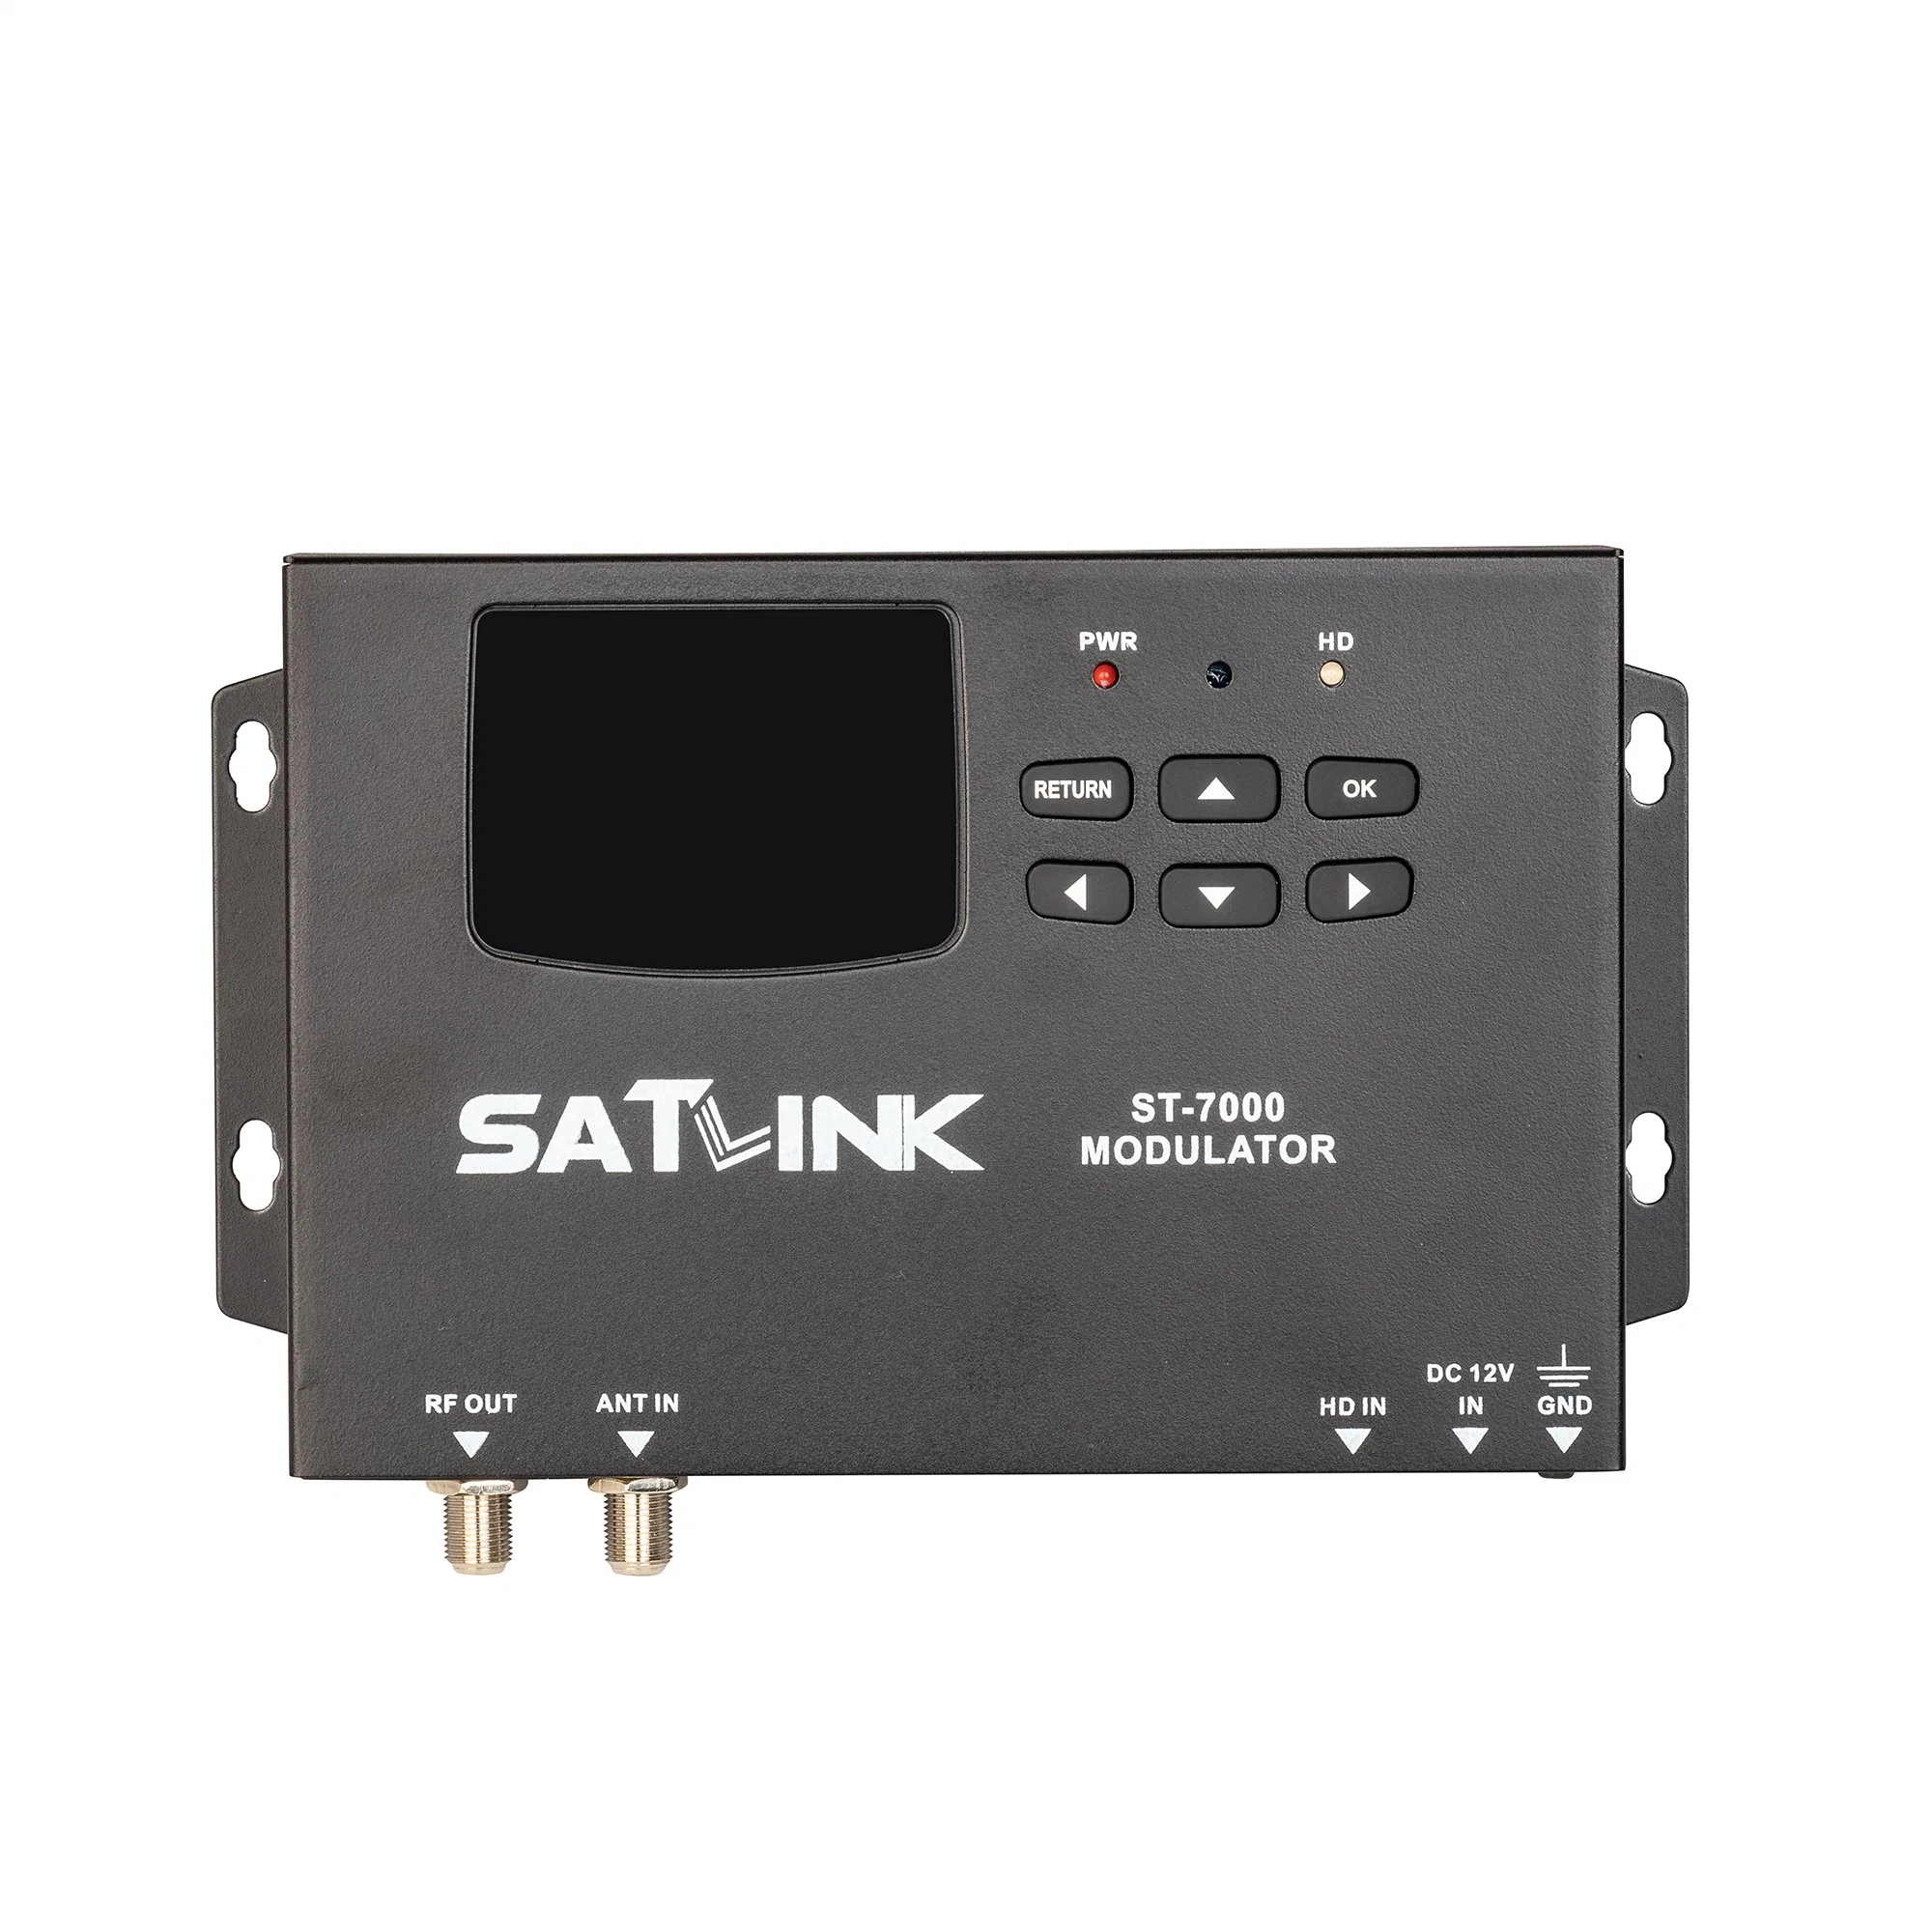 St-7000 DVB-ATSC/Dtmb/Isdbt/C HDMI Modulator Receive Signal